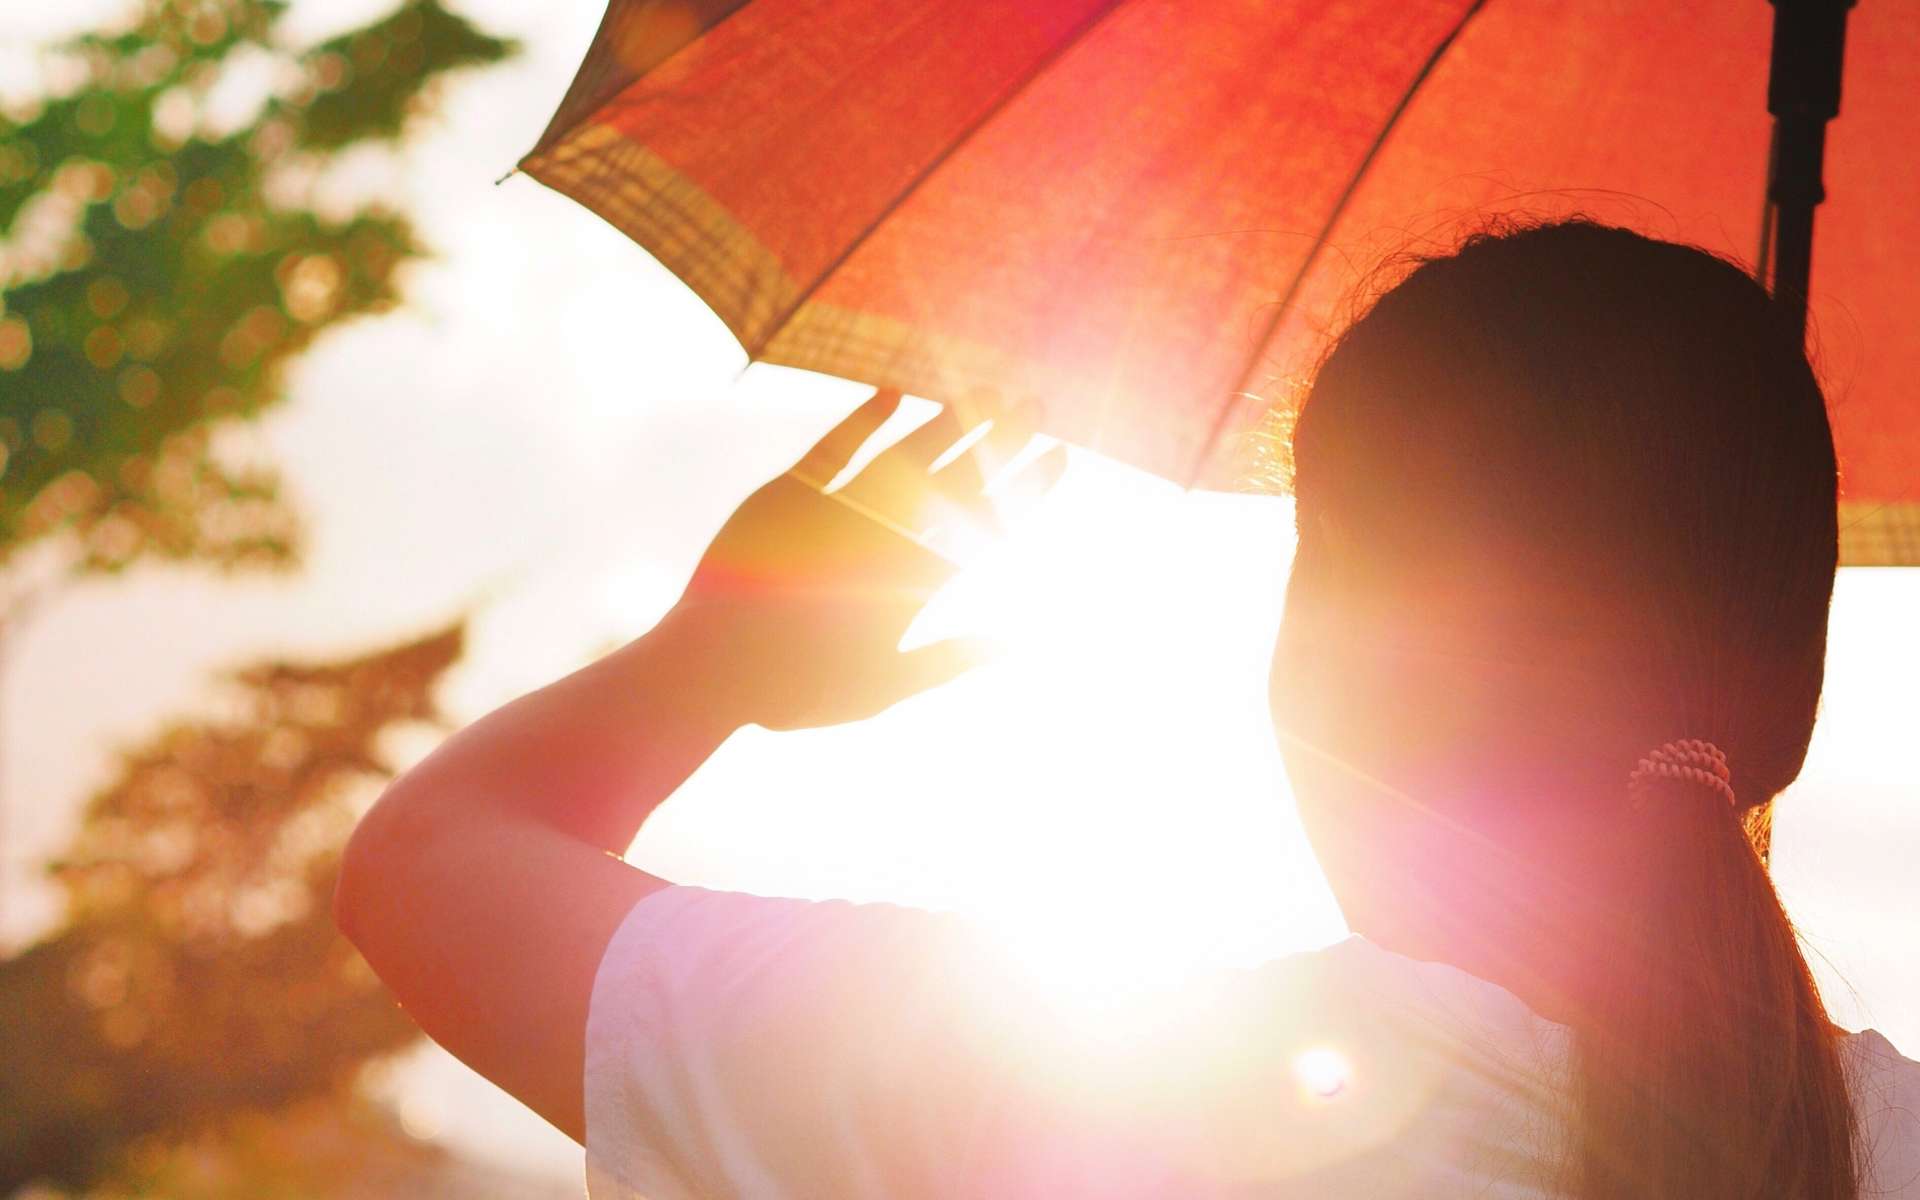 Bien s'hydrater, se protéger du soleil permet de prévenir l'insolation. © Tanapat Lek,jew, Adobe Stock